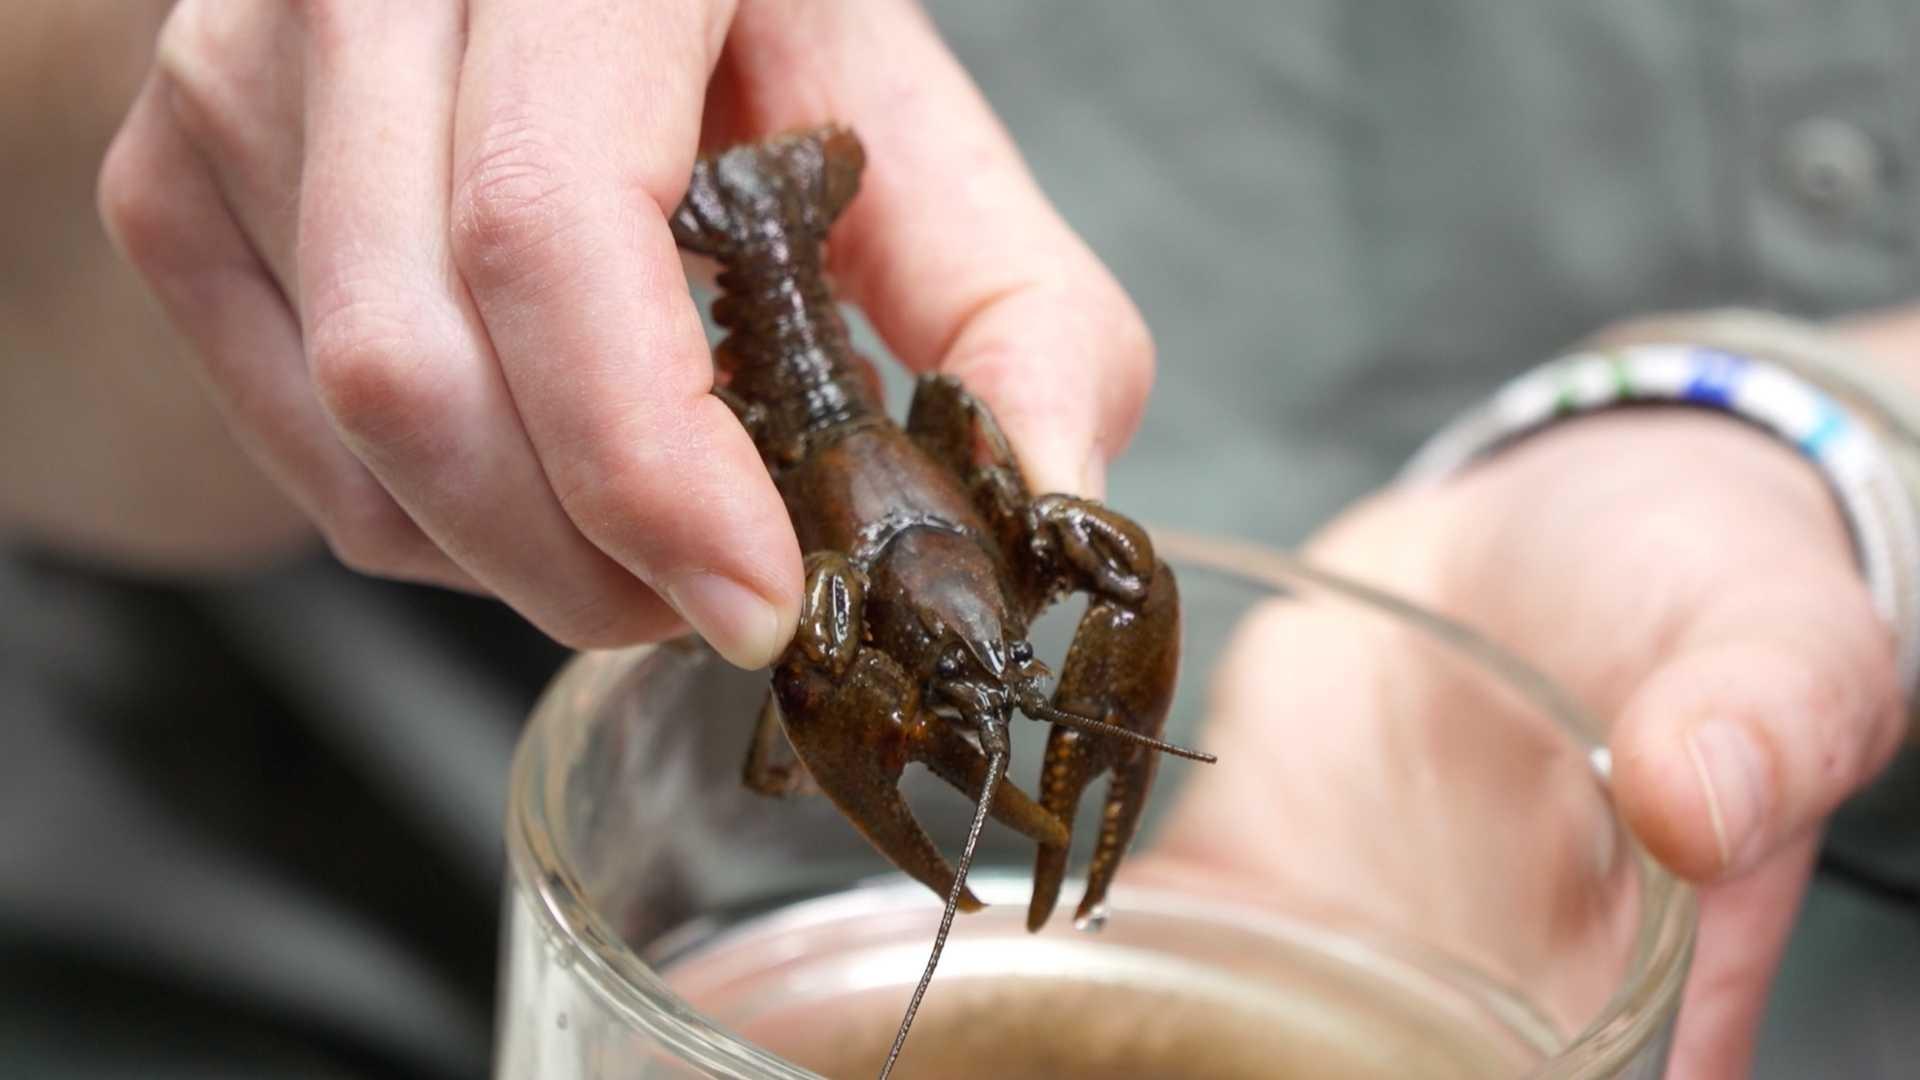 How do crayfish survive in nasty waters?